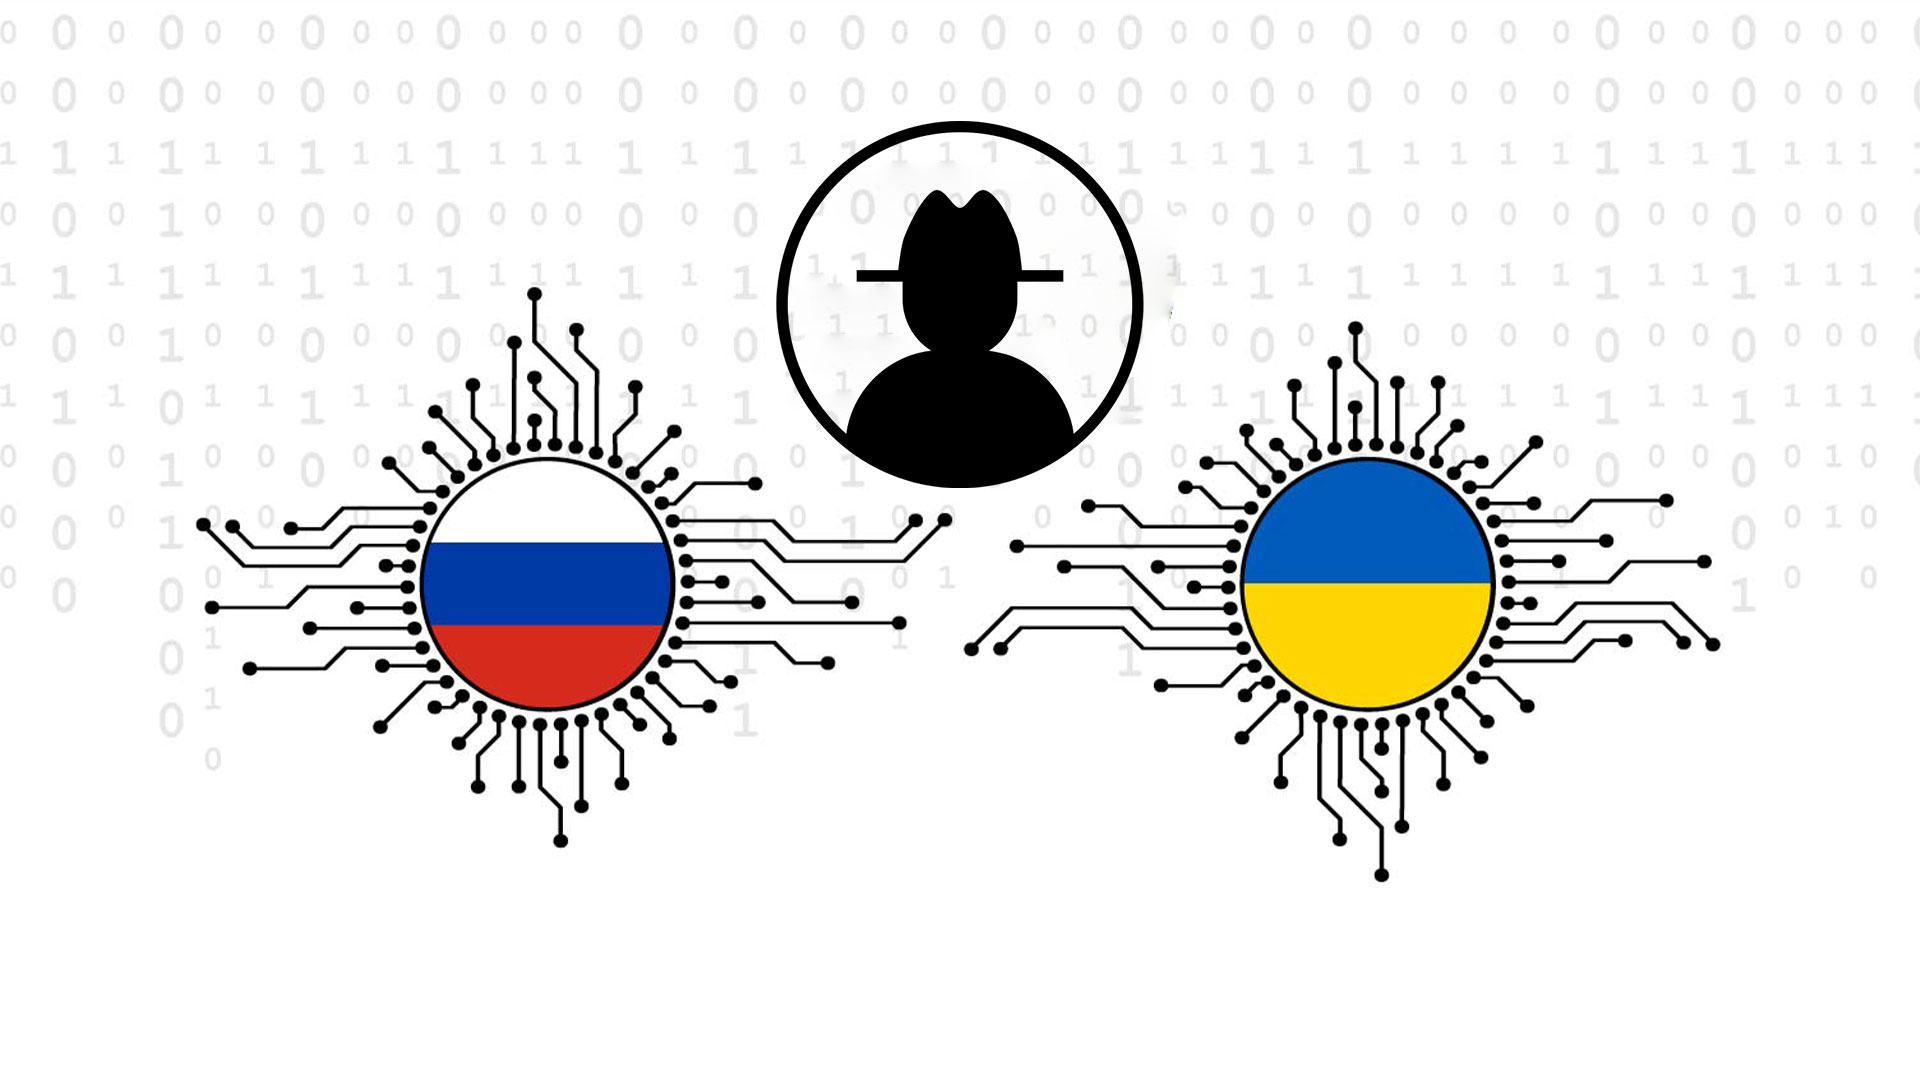 تیم واکنش اضطراری کامپیوتری اوکراین (CERT-UA)